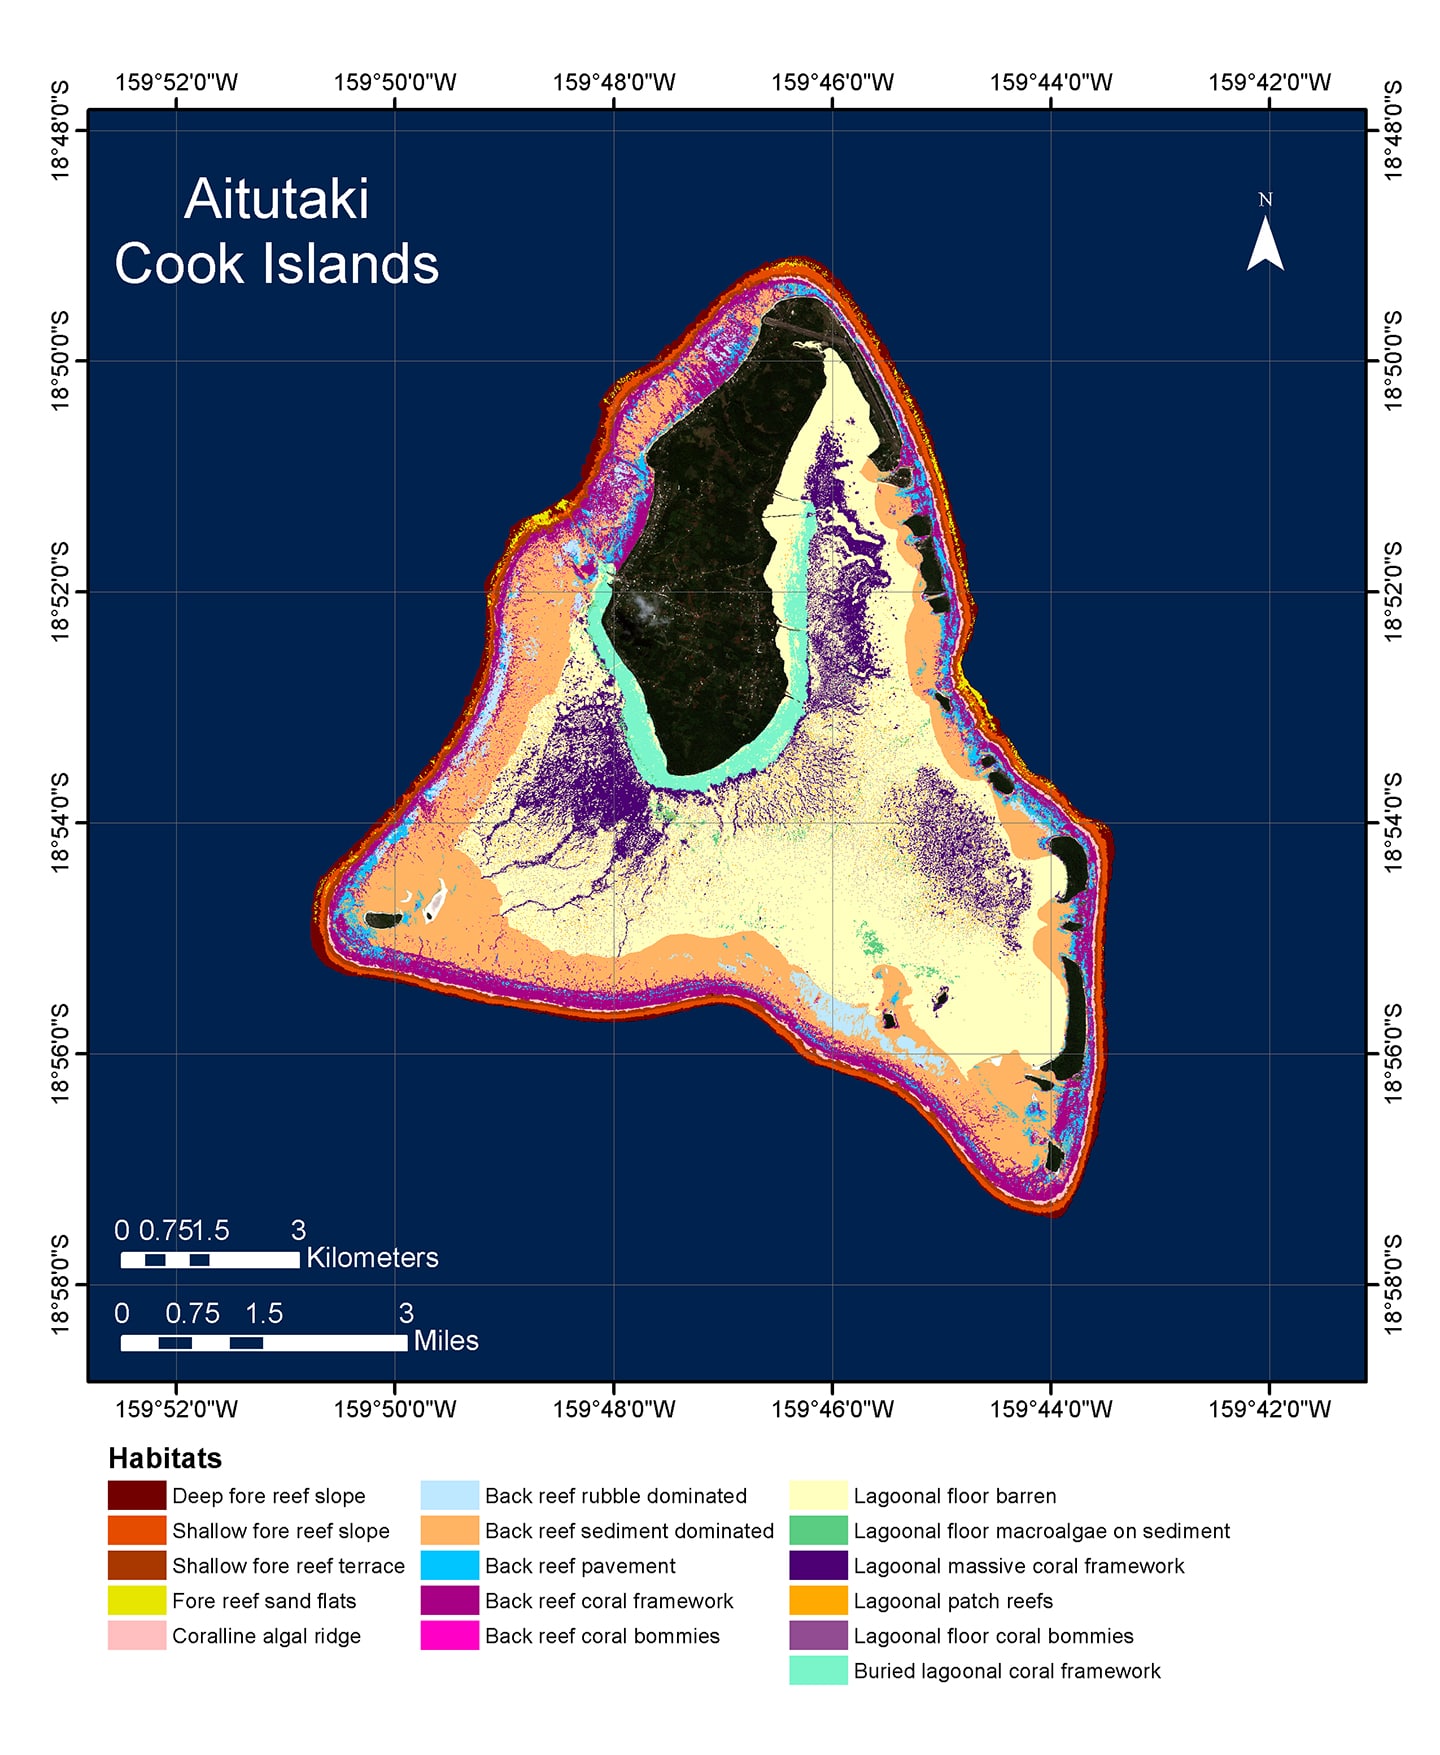 Gis Interactive Maps Of Ocean Floor From Remote Sensingliving